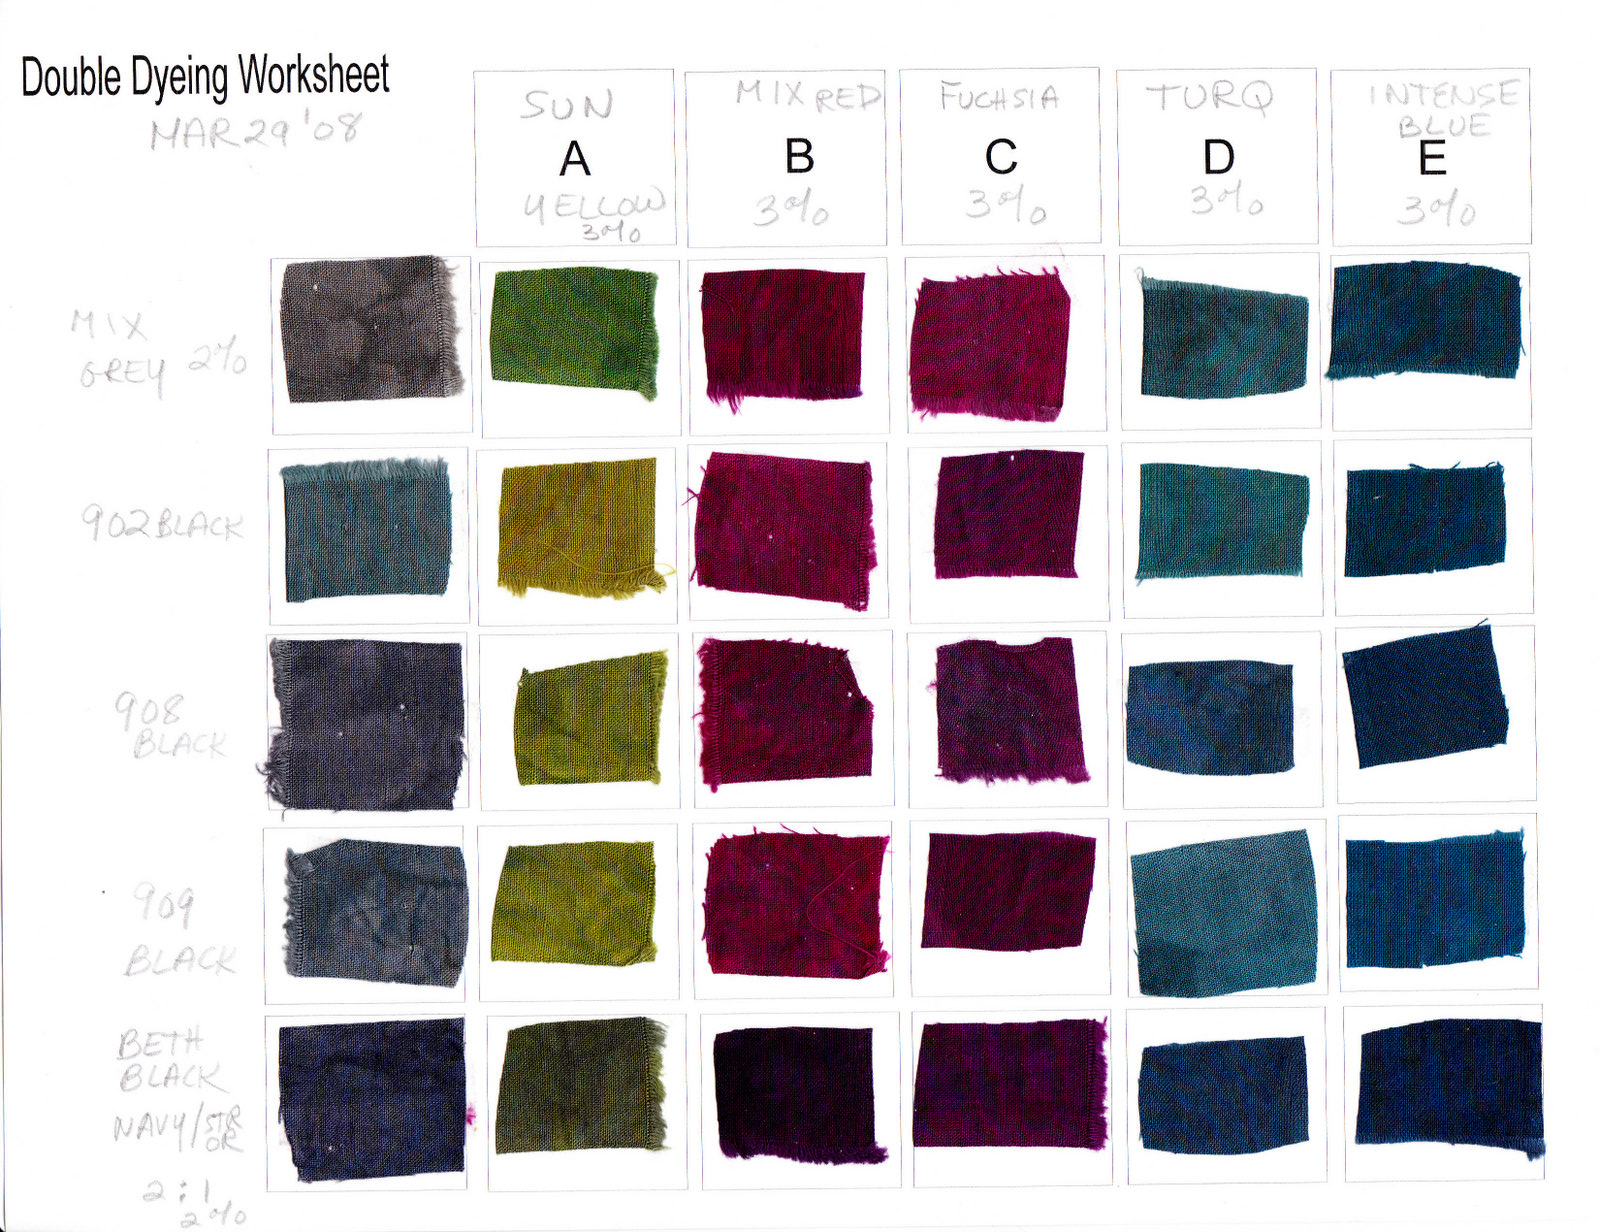 Beth's Blog: The Newly Dyed Fabrics - Part II